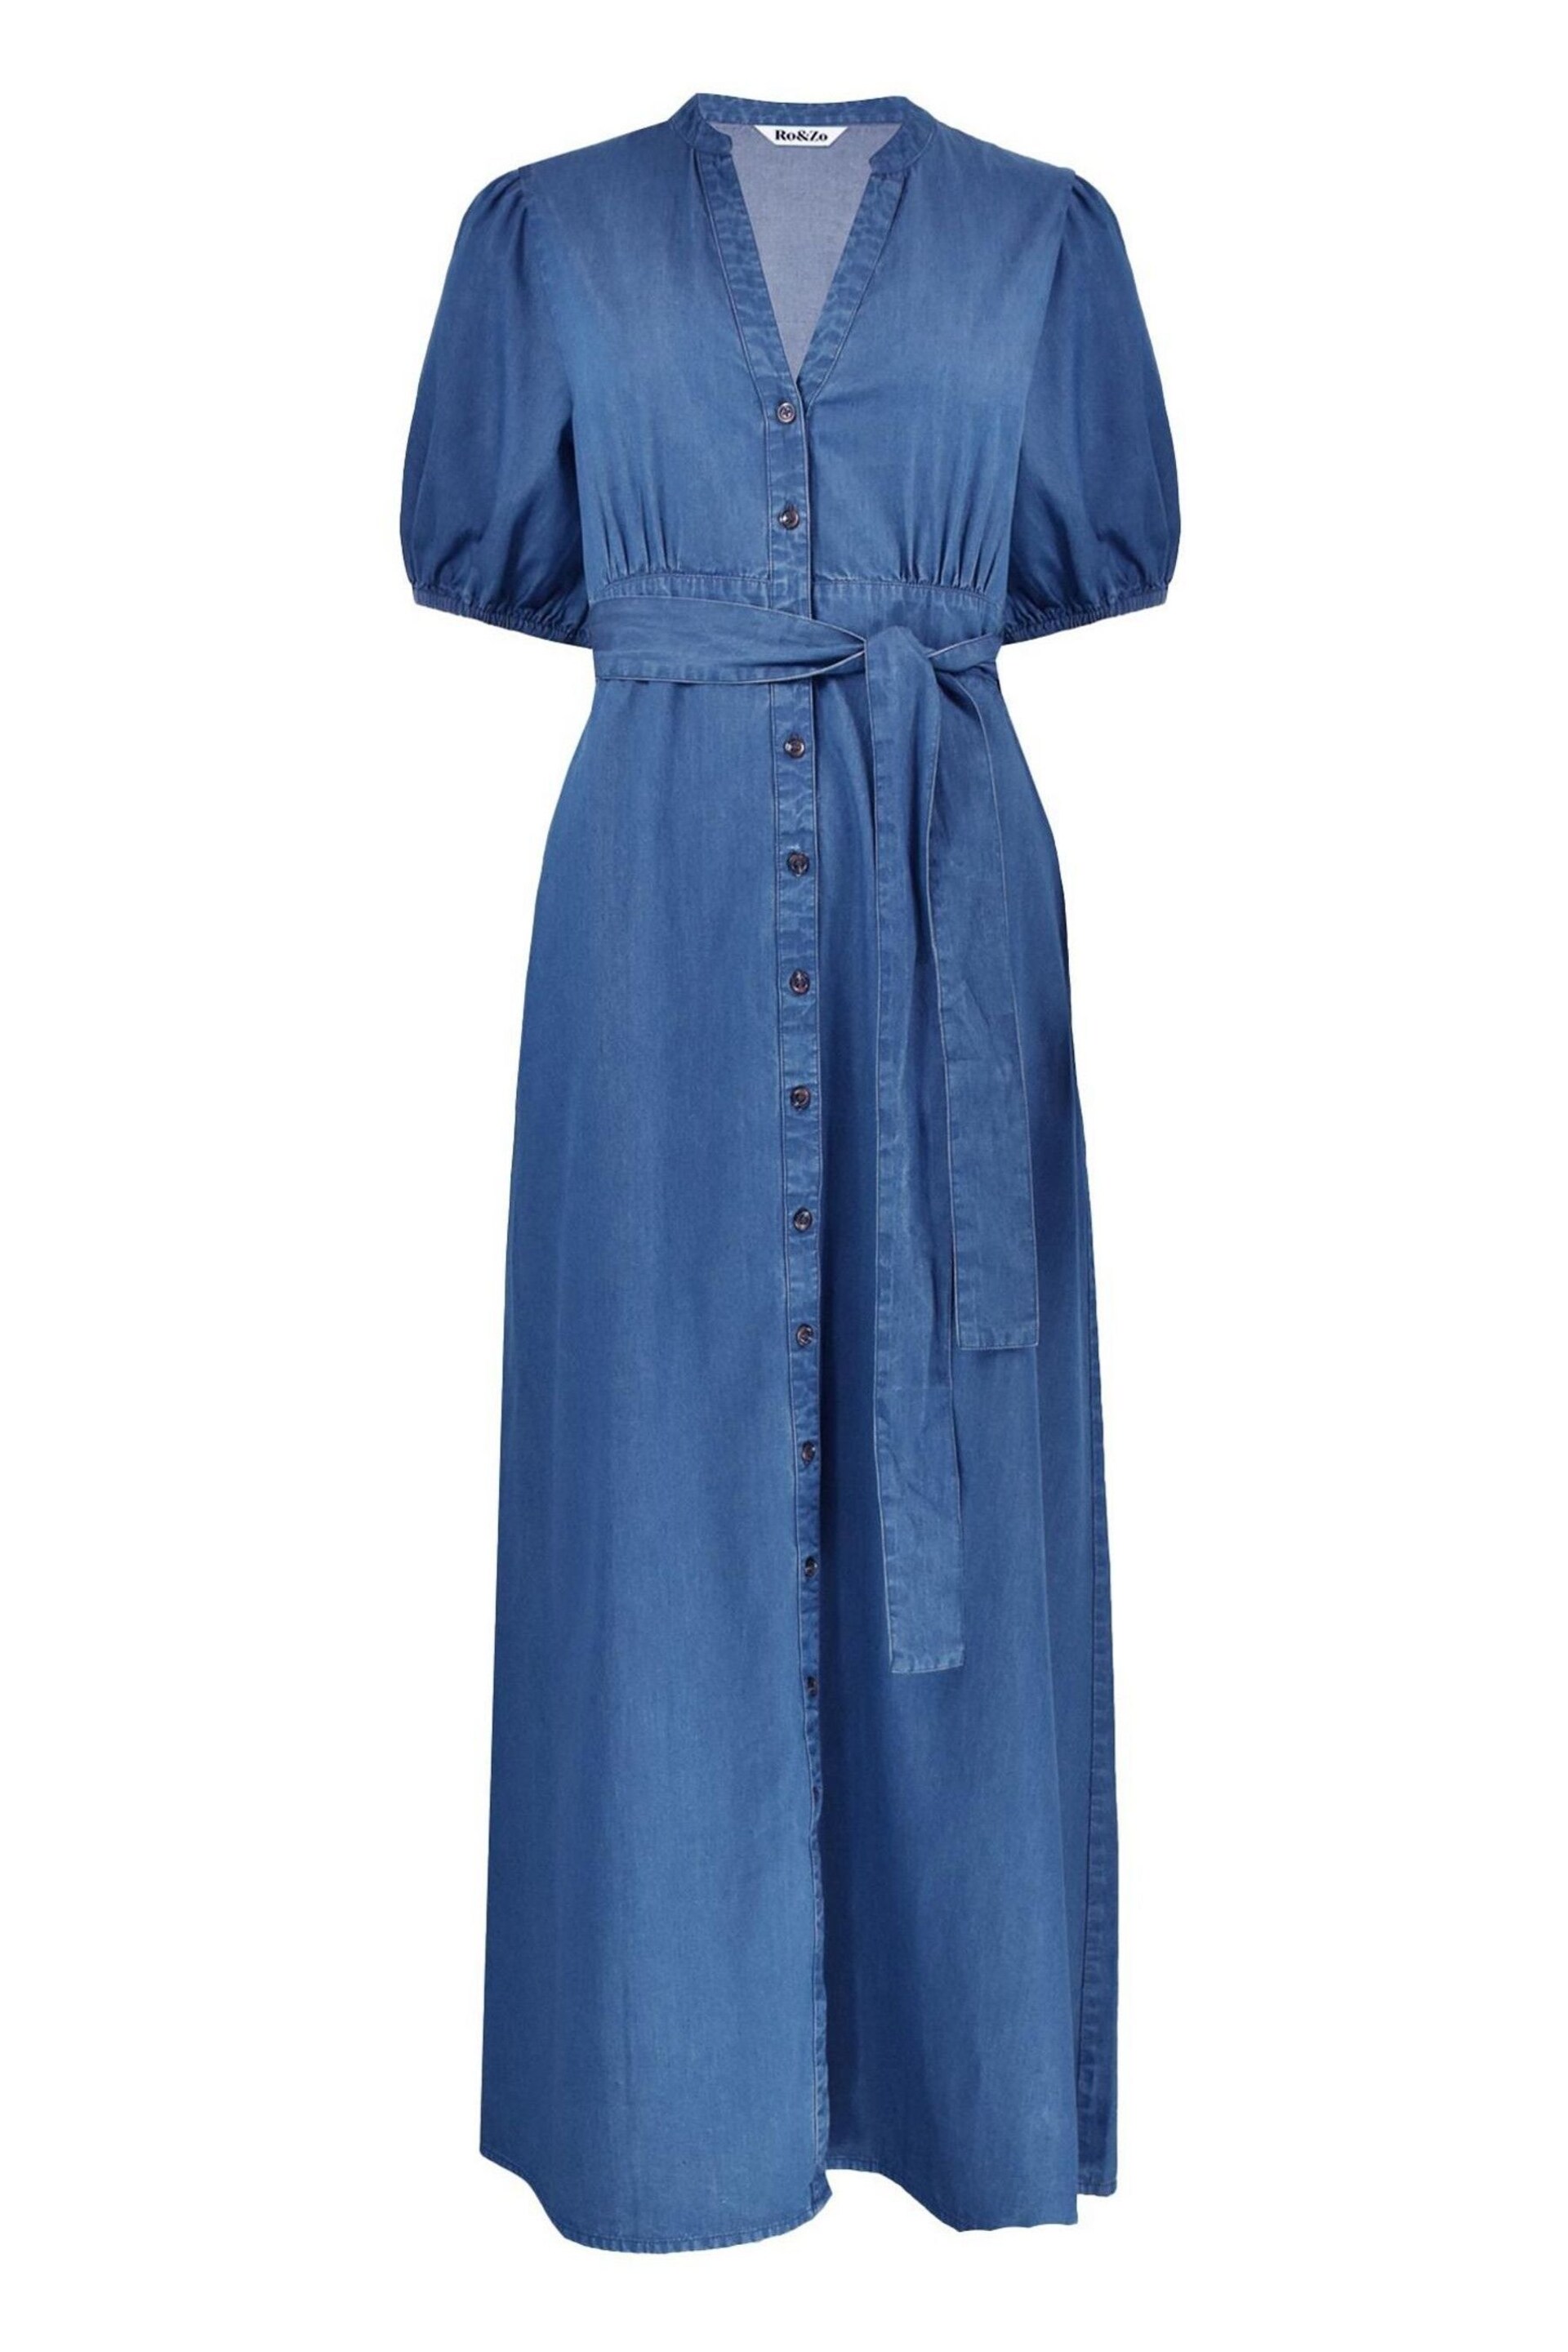 Ro&Zo Blue Tie Waist Tencel Shirt Dress - Image 7 of 7